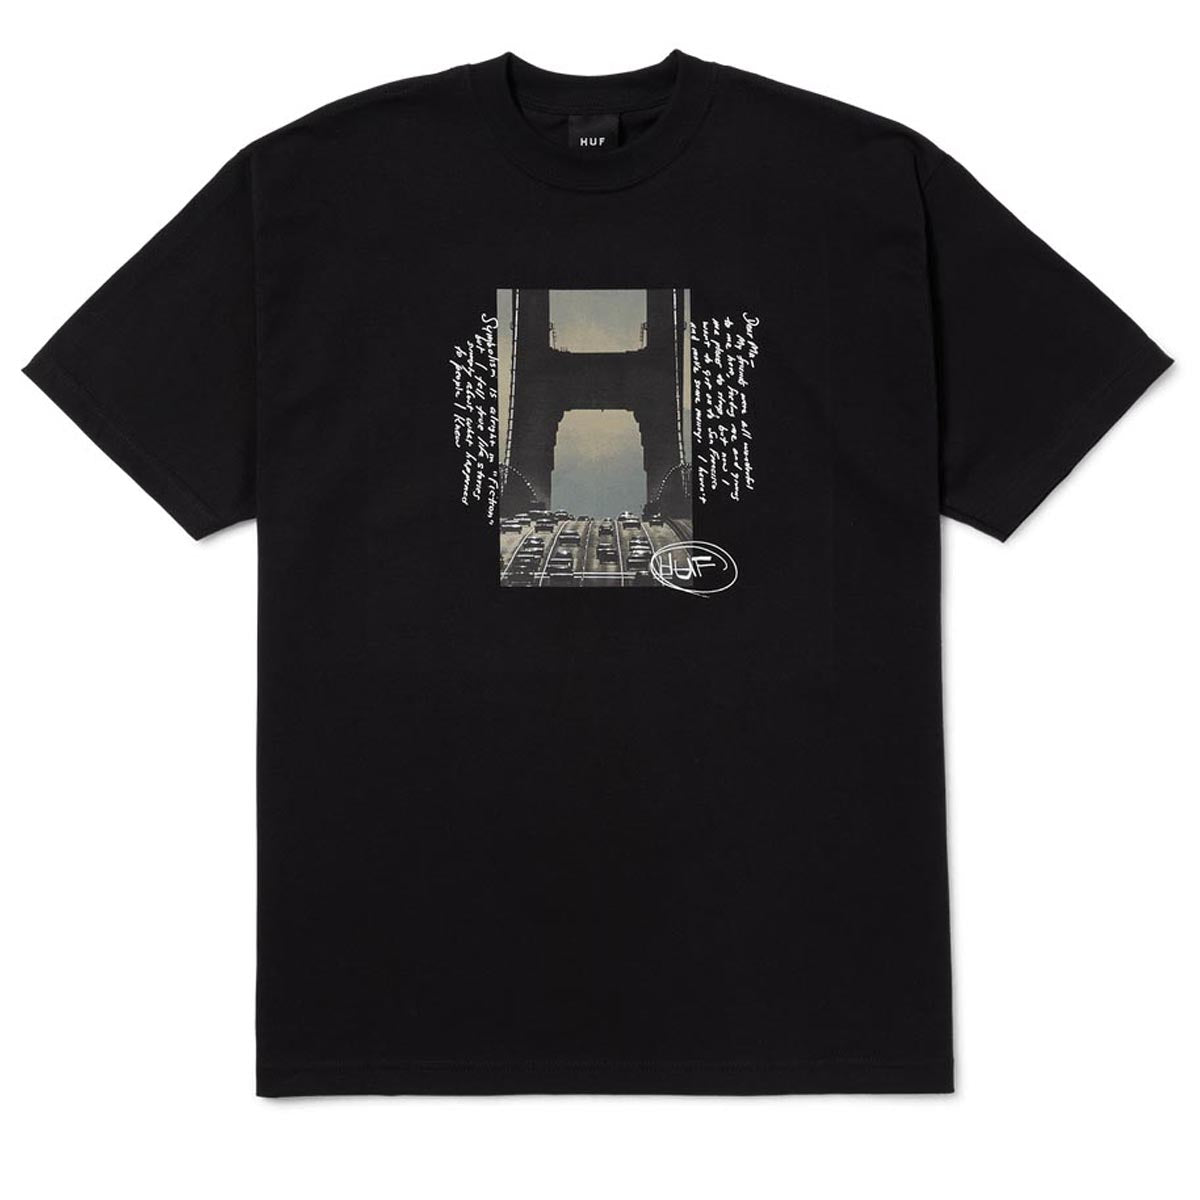 HUF Bridges T-Shirt - Black image 1